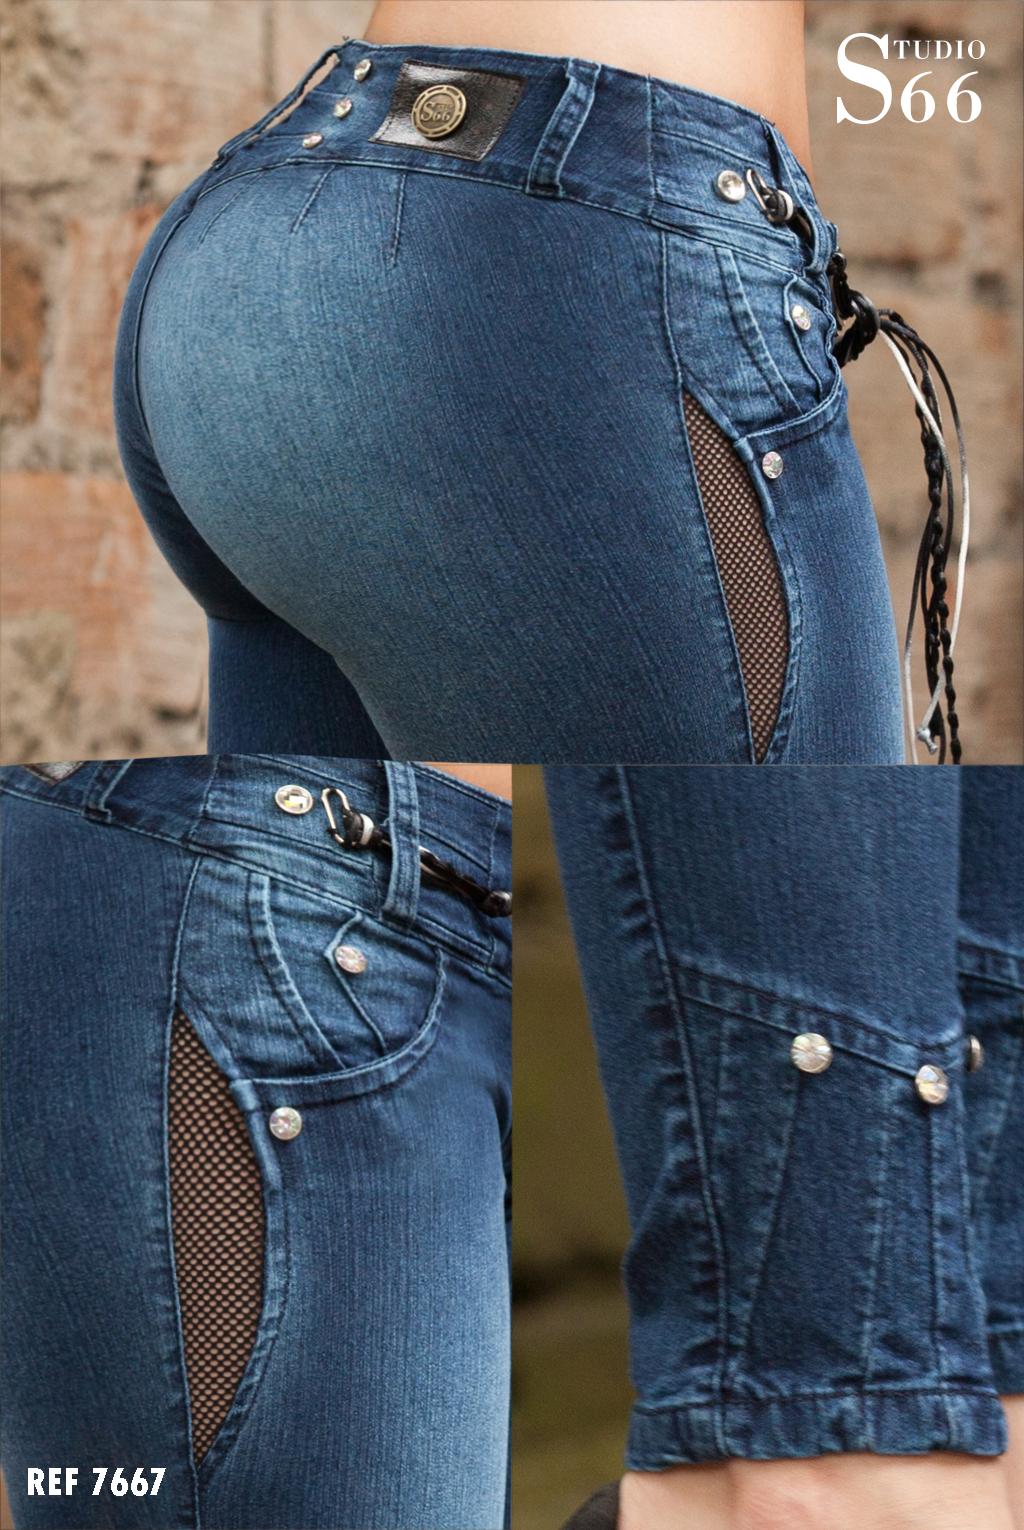 Jean detalles sexys